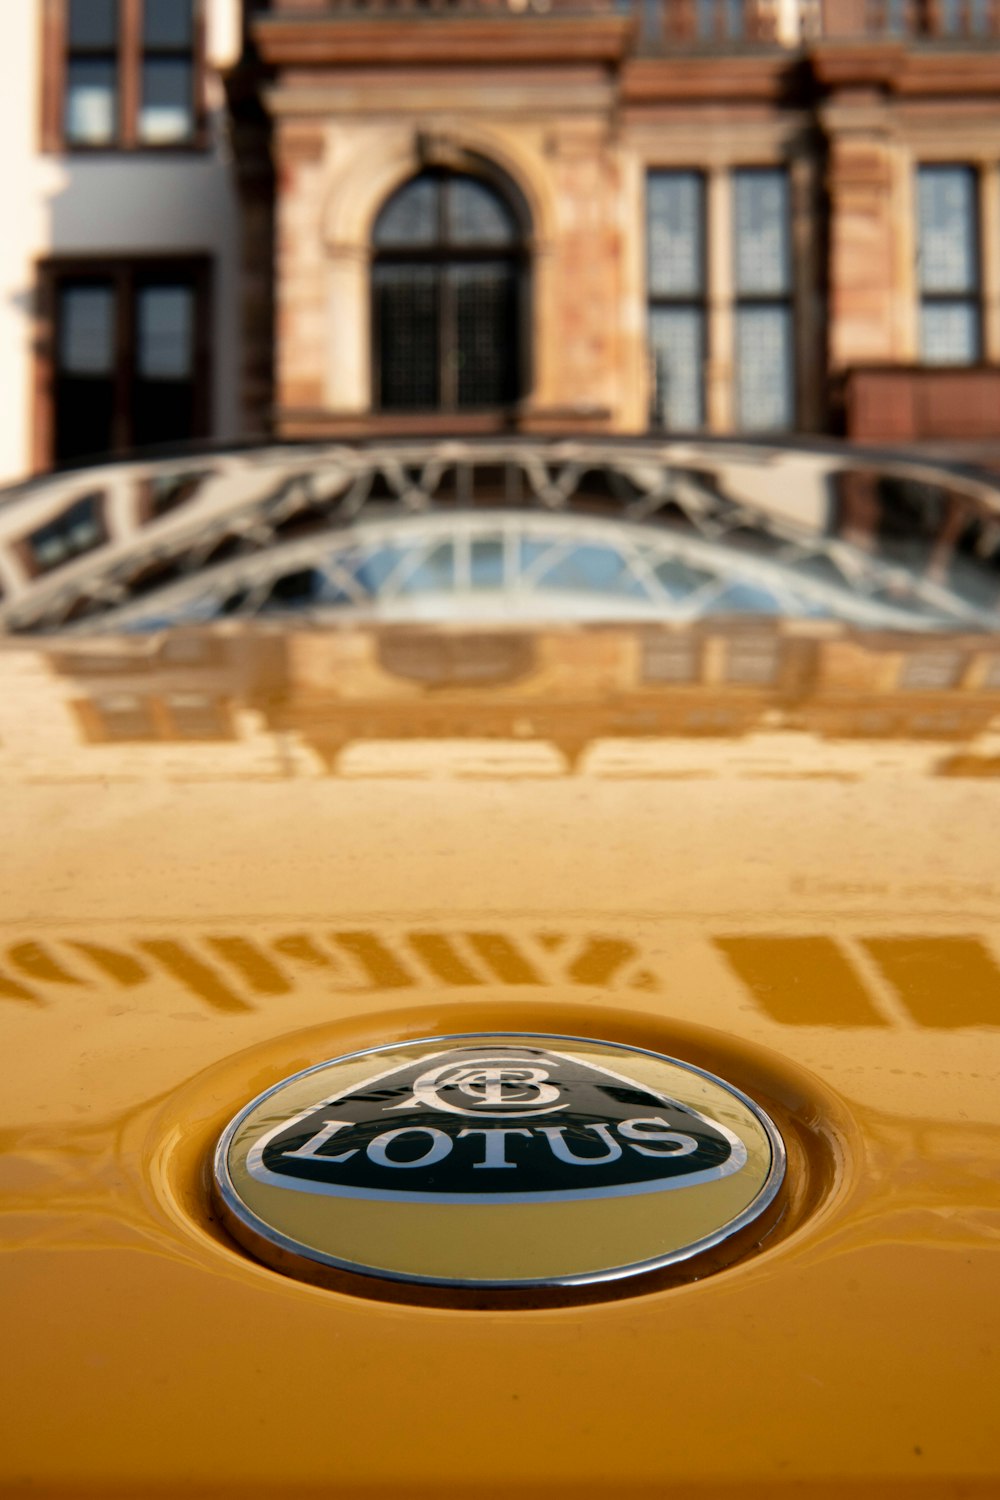 yellow Lotus vehicle